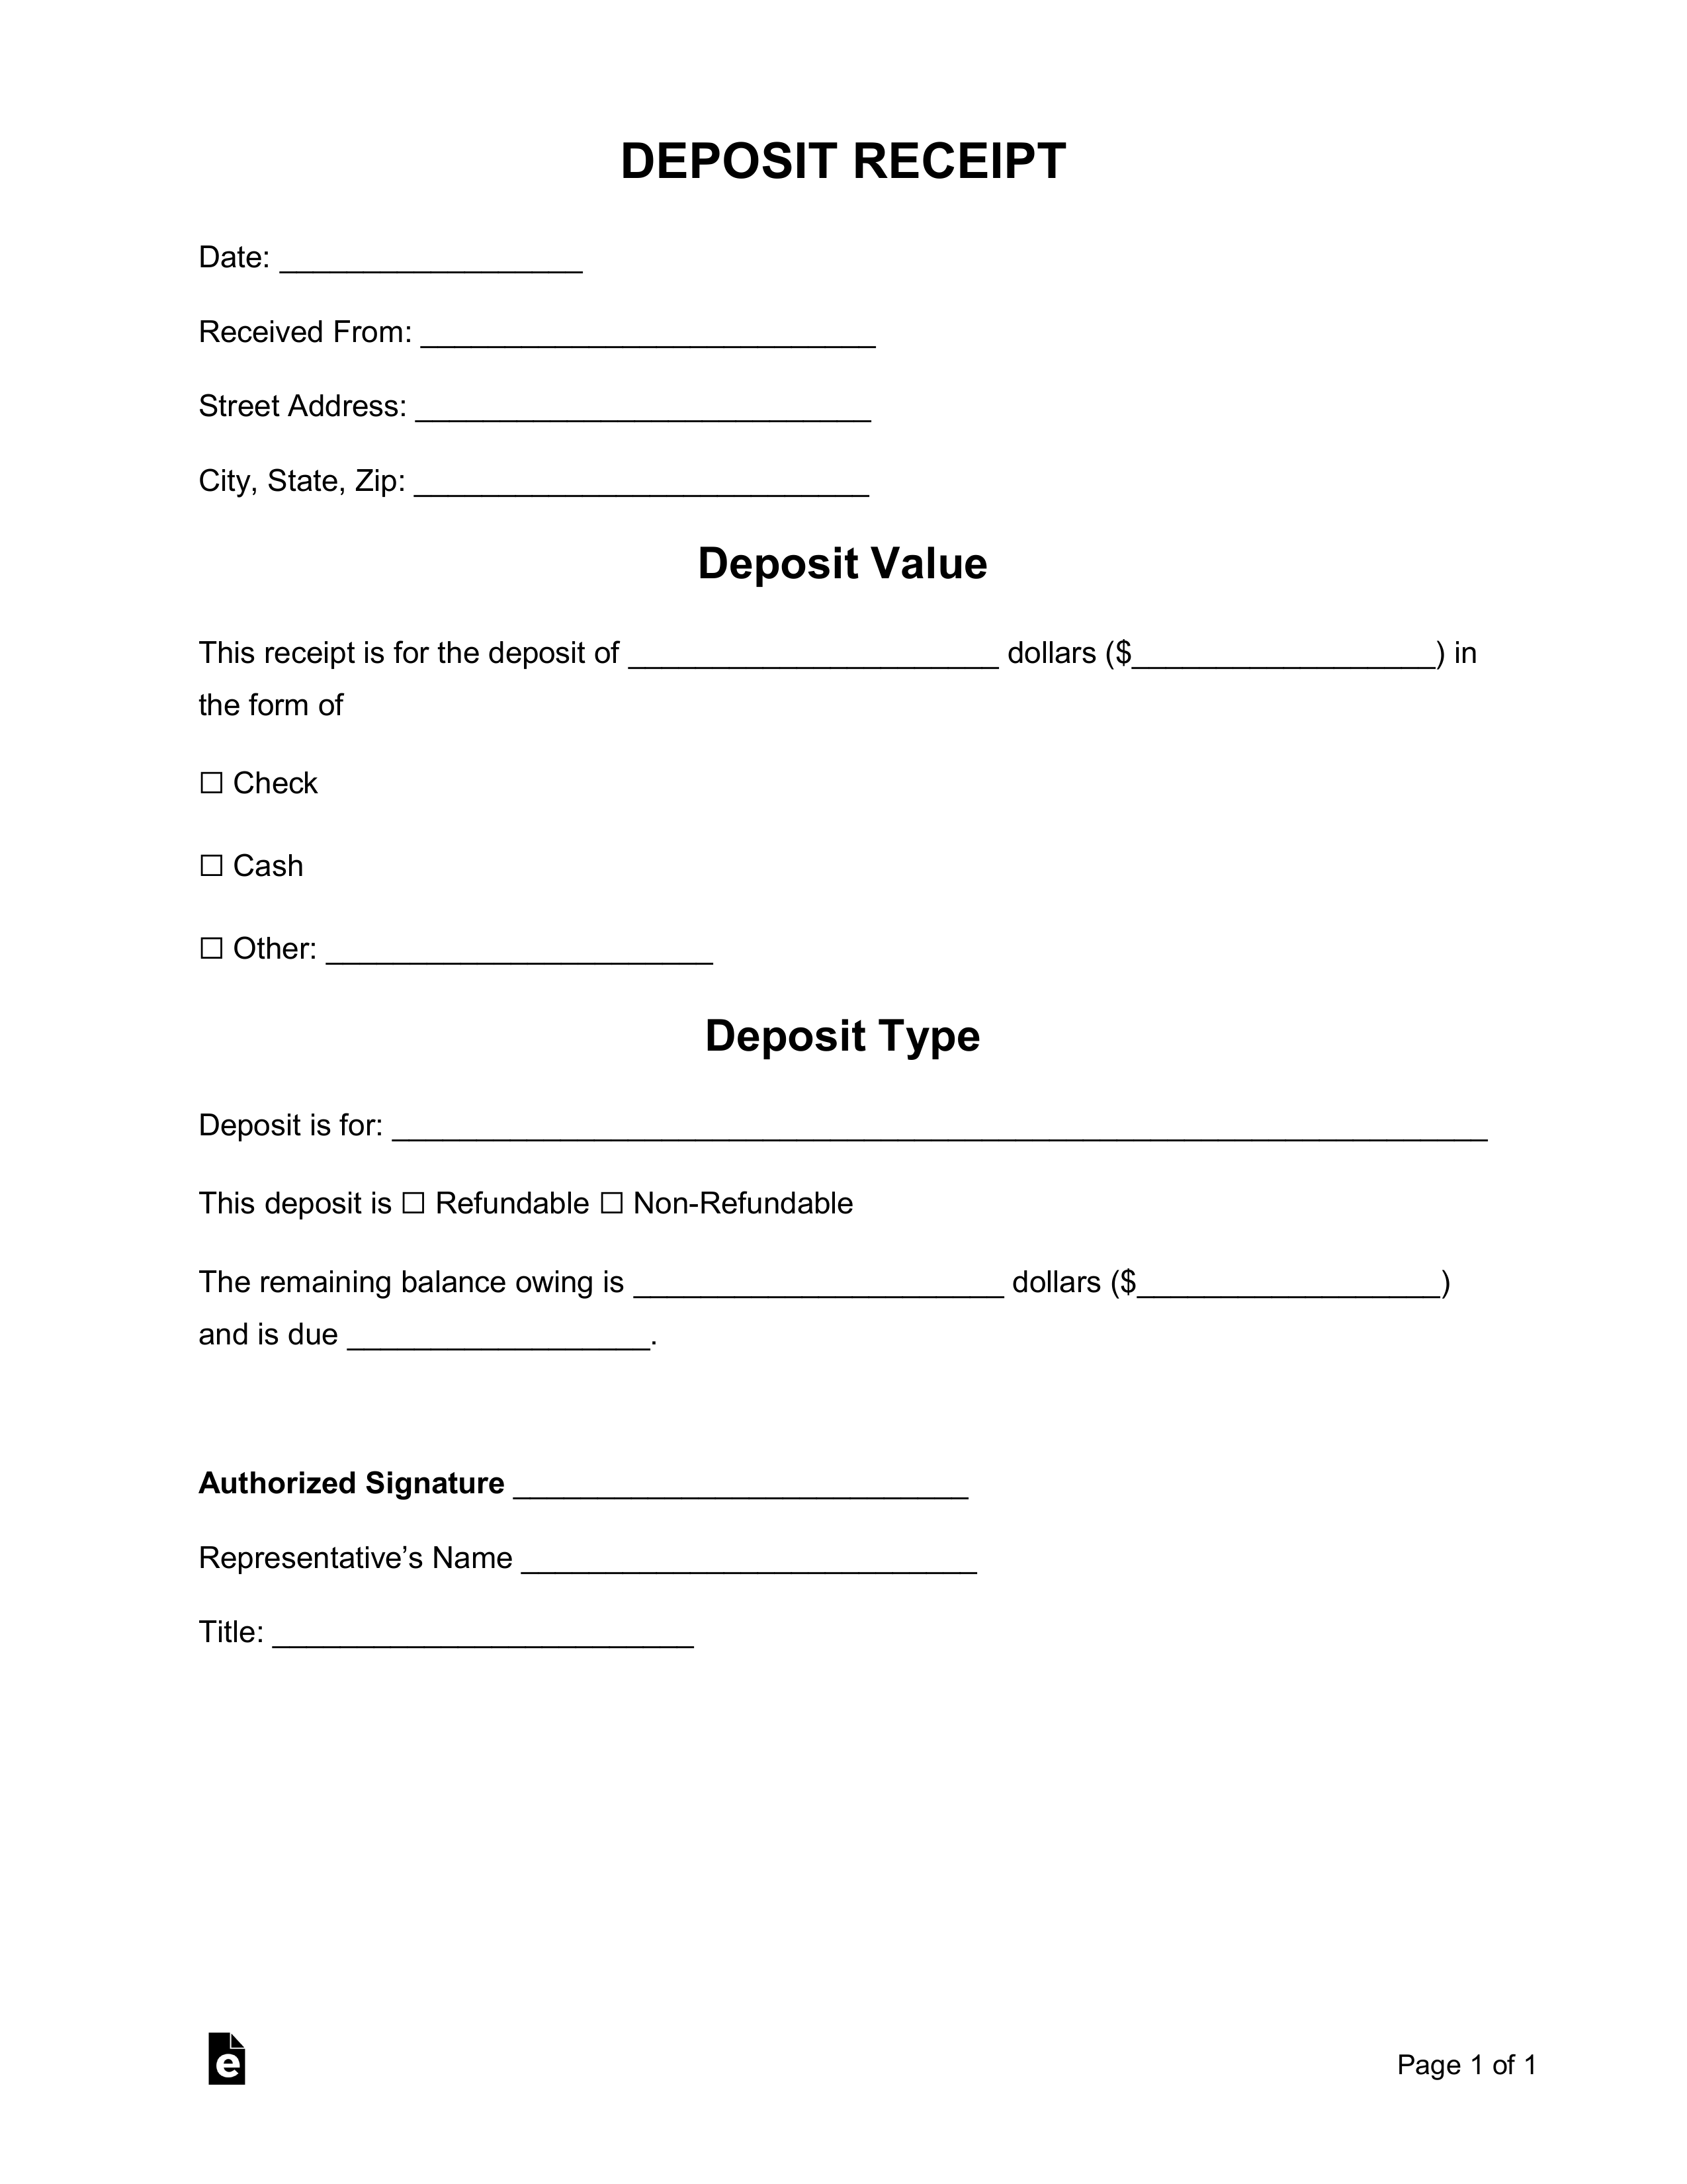 Free Deposit Receipt Templates - Word  PDF – eForms In Security Deposit Agreement Letter Regarding Security Deposit Agreement Letter